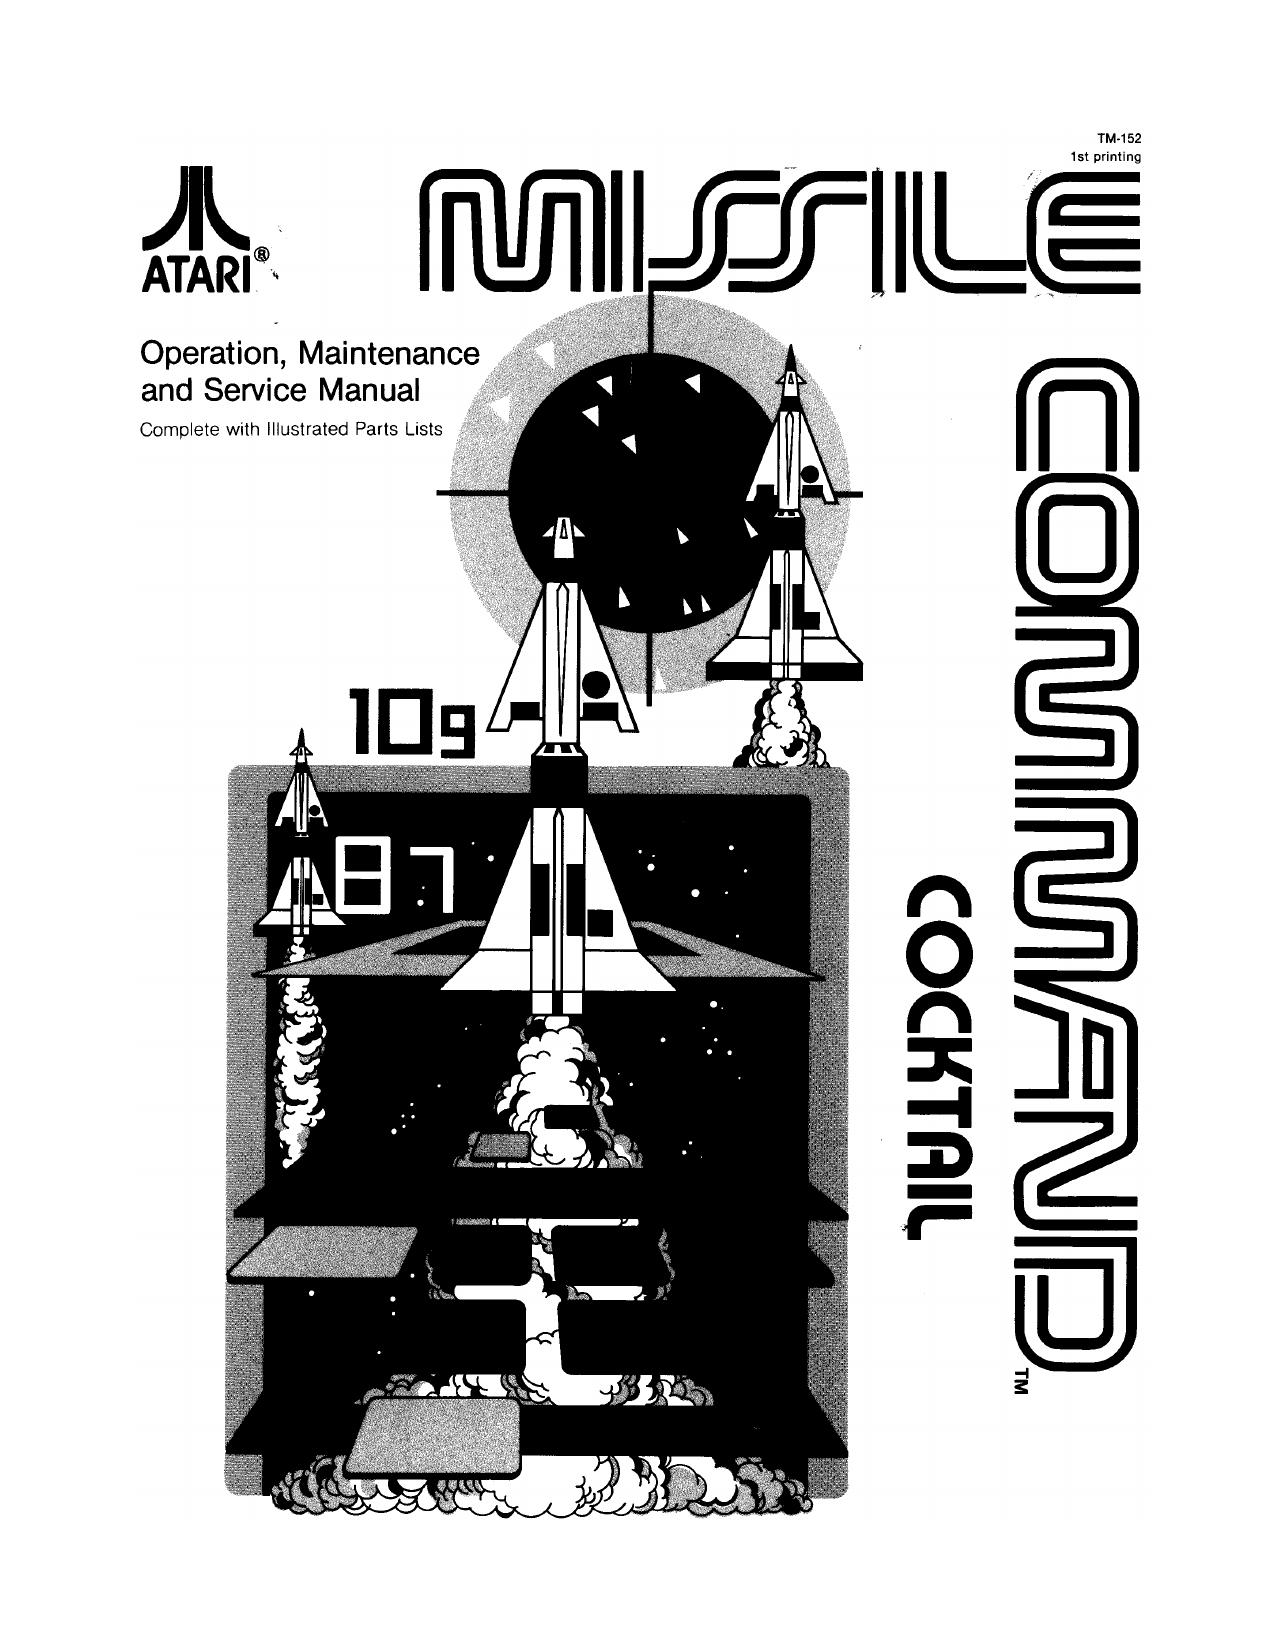 Missile Command (Cocktail TM-152 1st Printing) (Op-Maint-Serv-Parts) (U)